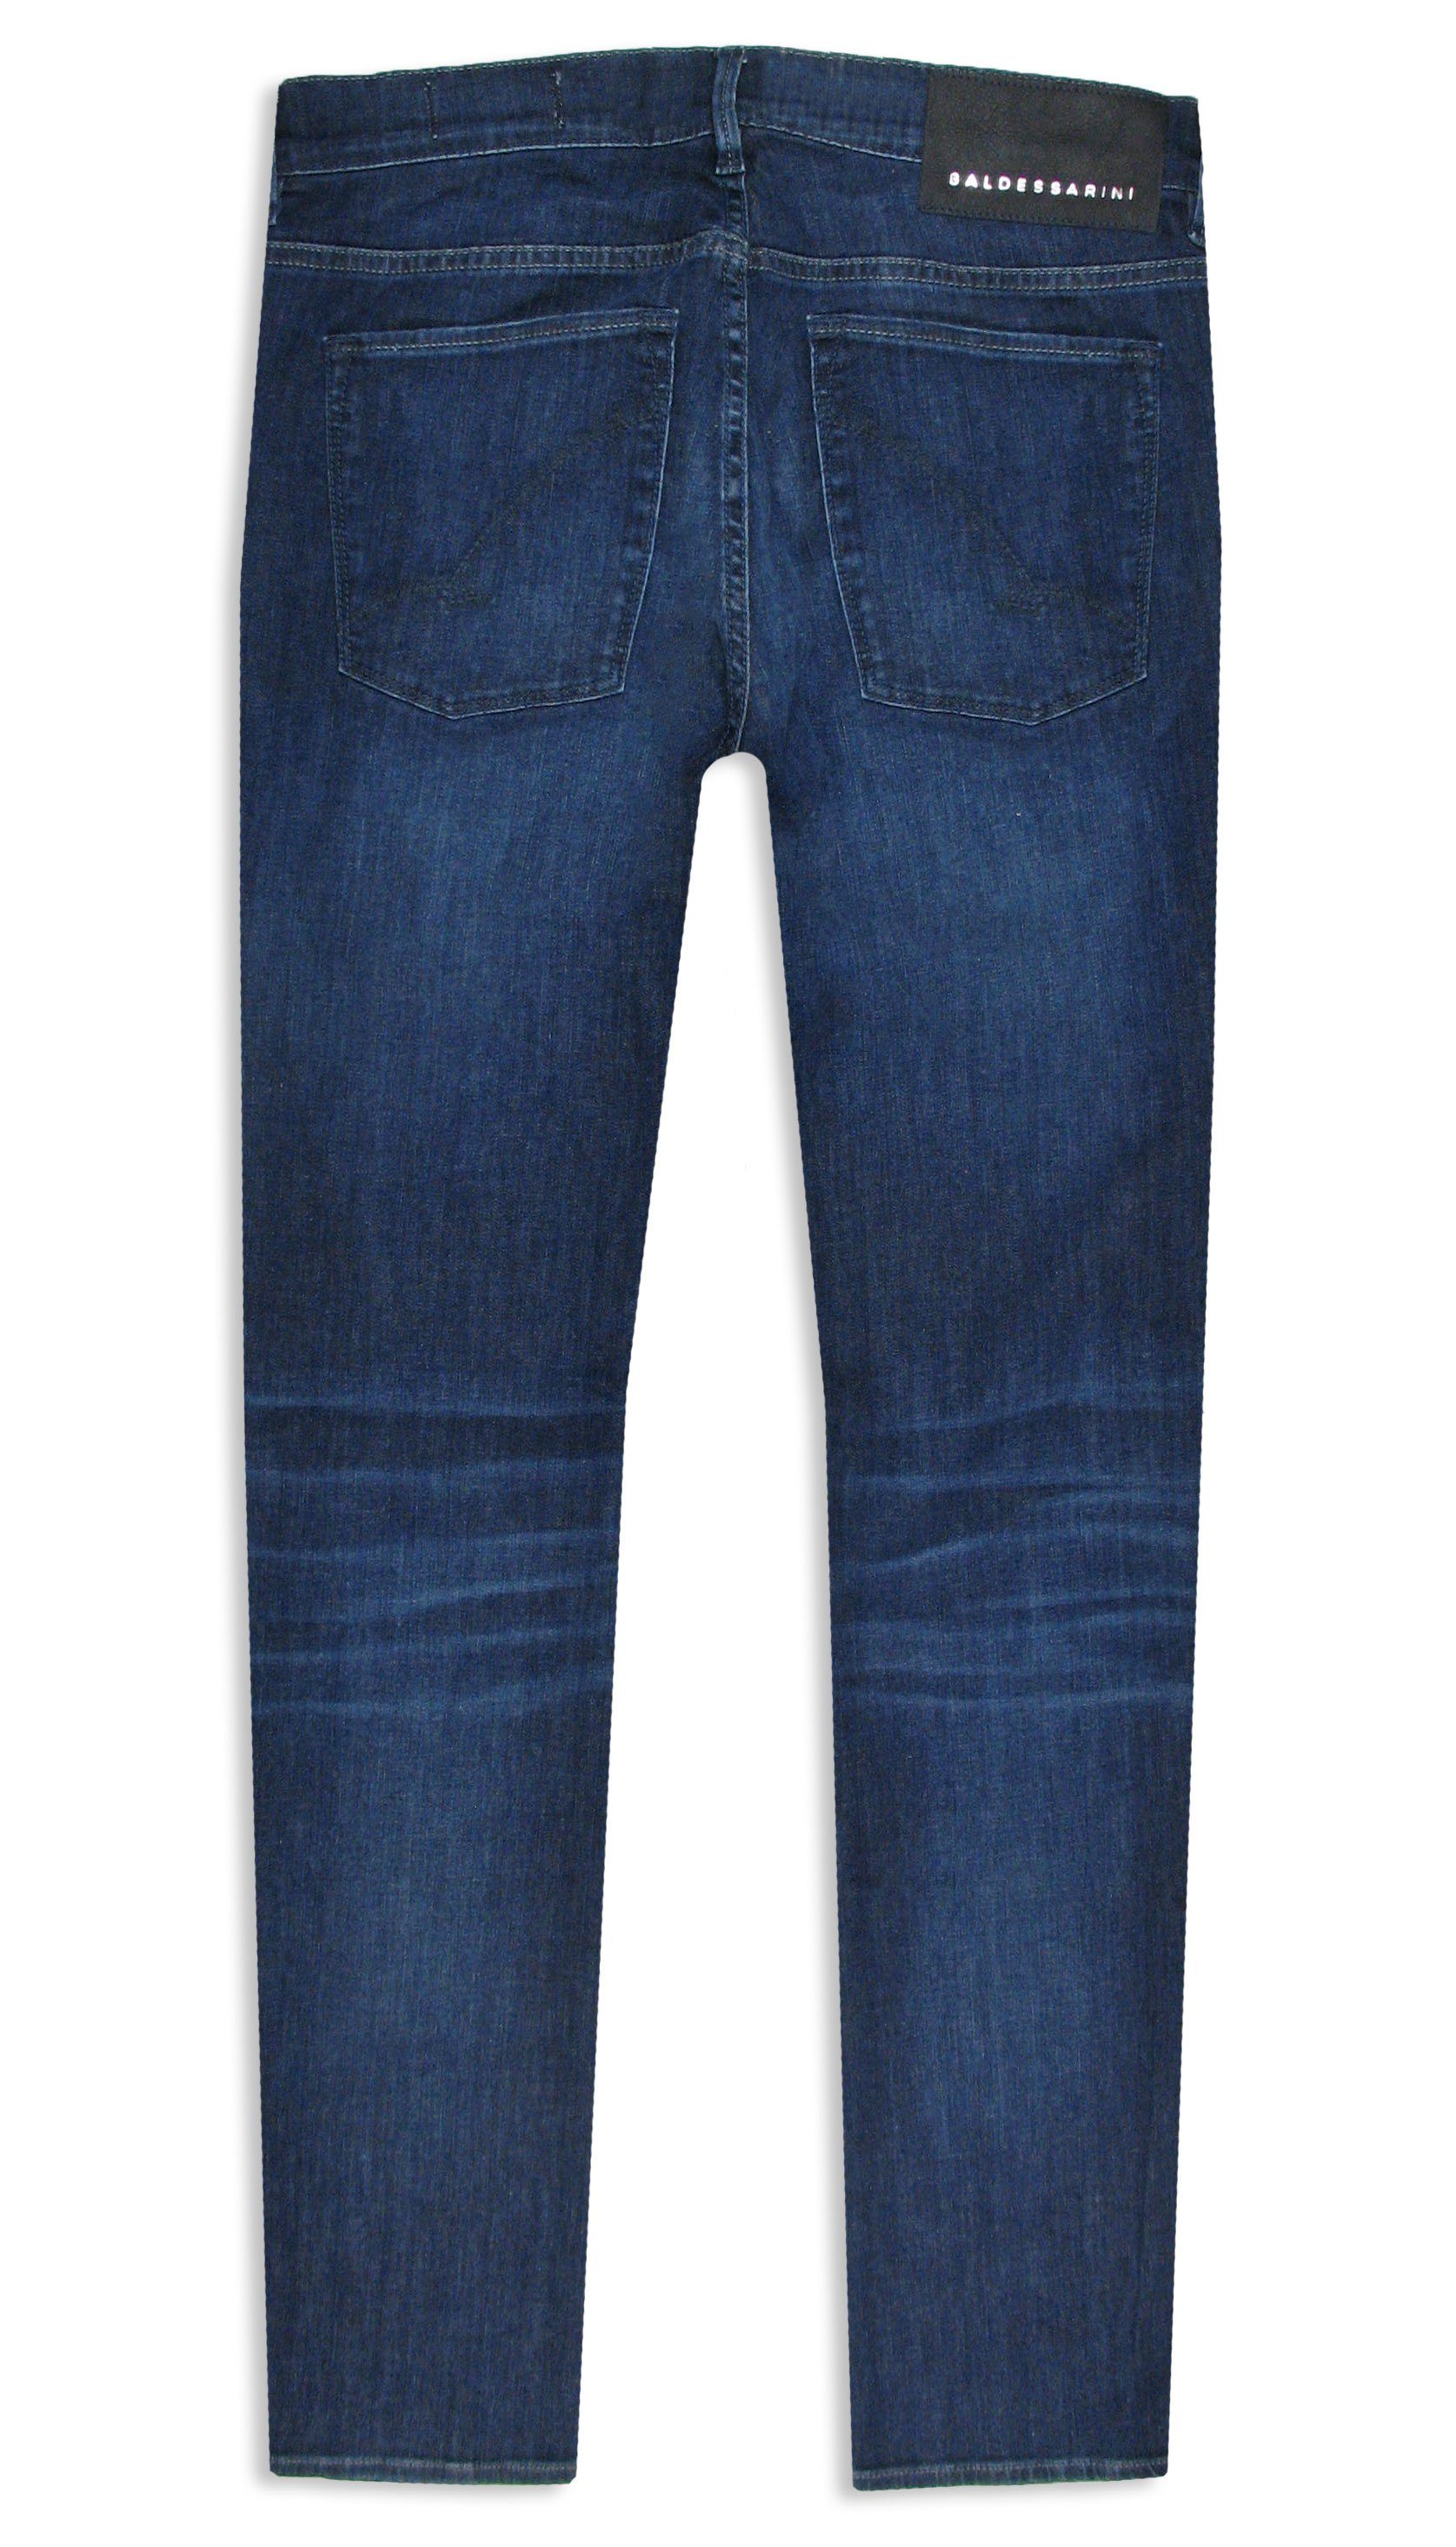 BALDESSARINI 5-Pocket-Jeans John Iconic Stretch Ocean Used Denim Blue